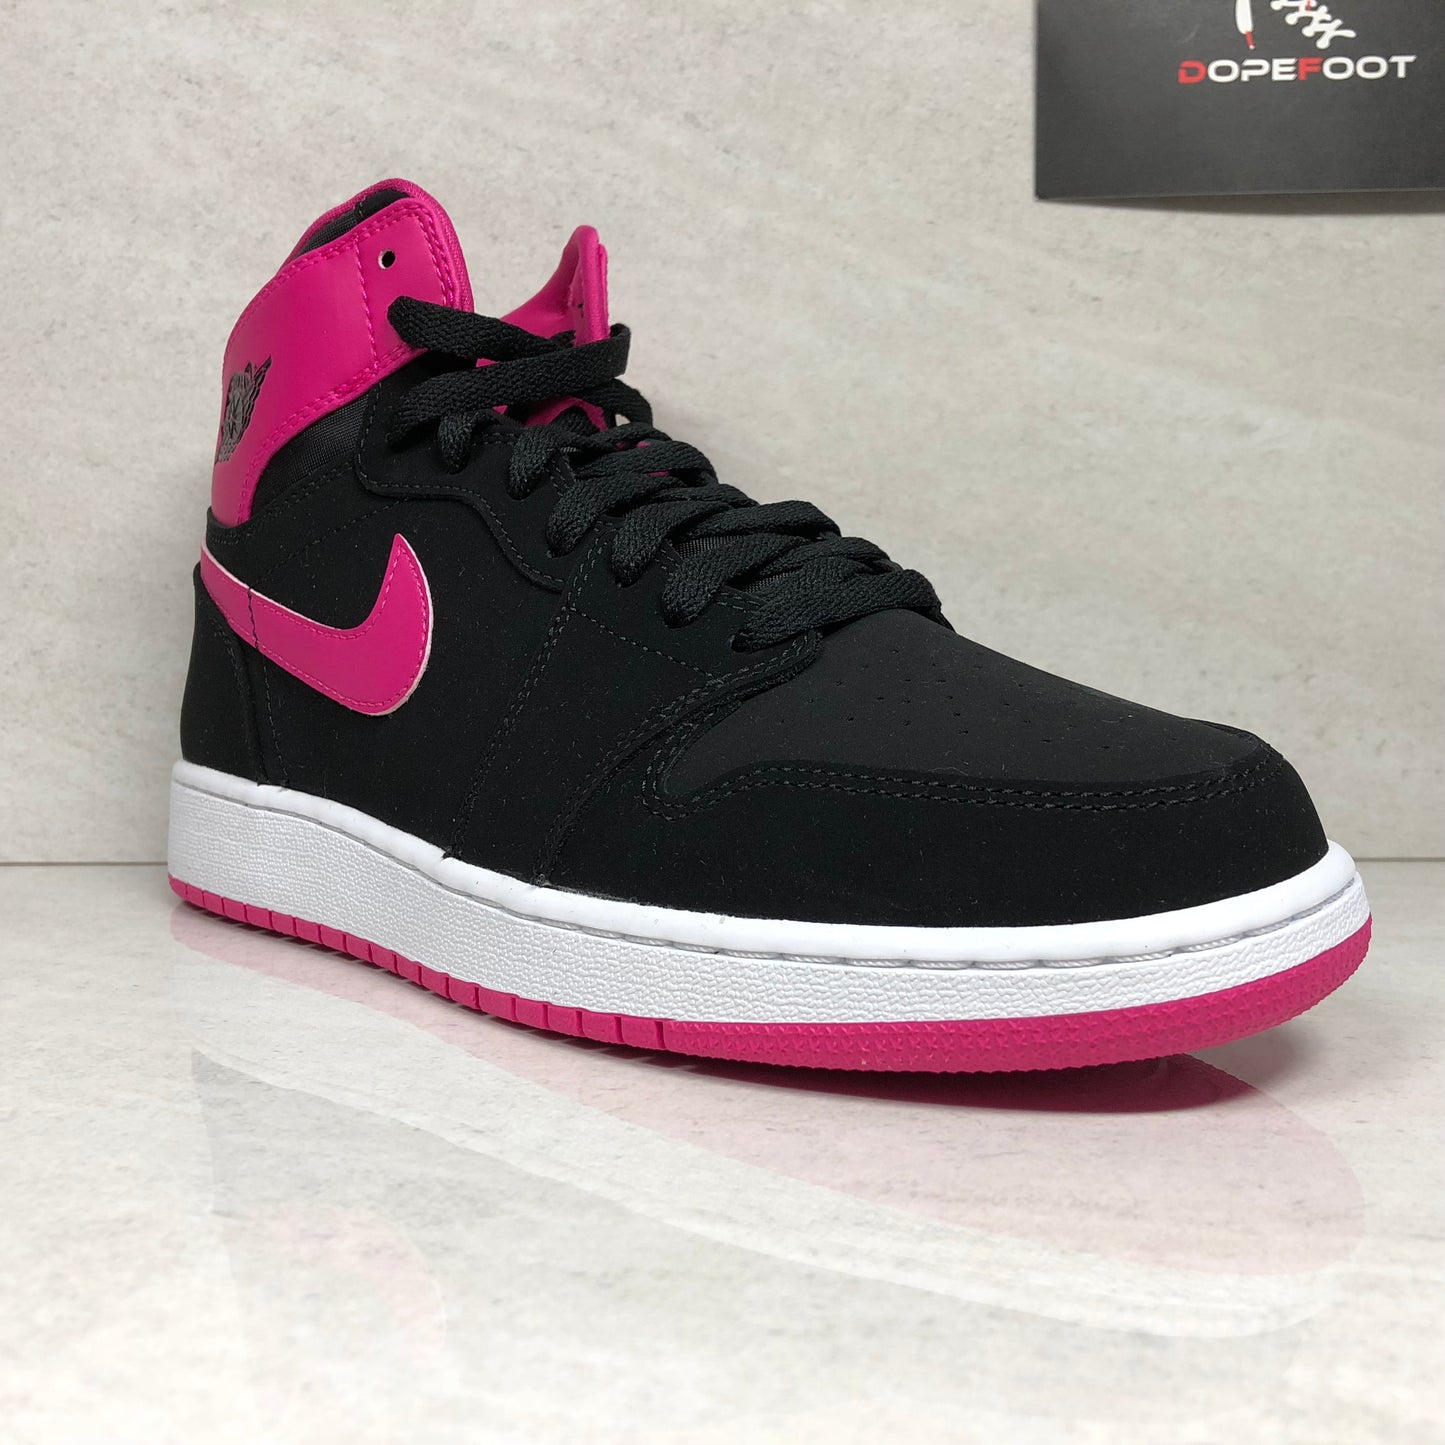 DS Nike Air Jordan 1 Retro High GG Size 8Y/8.5Y Black/Vivid Pink 332148 008